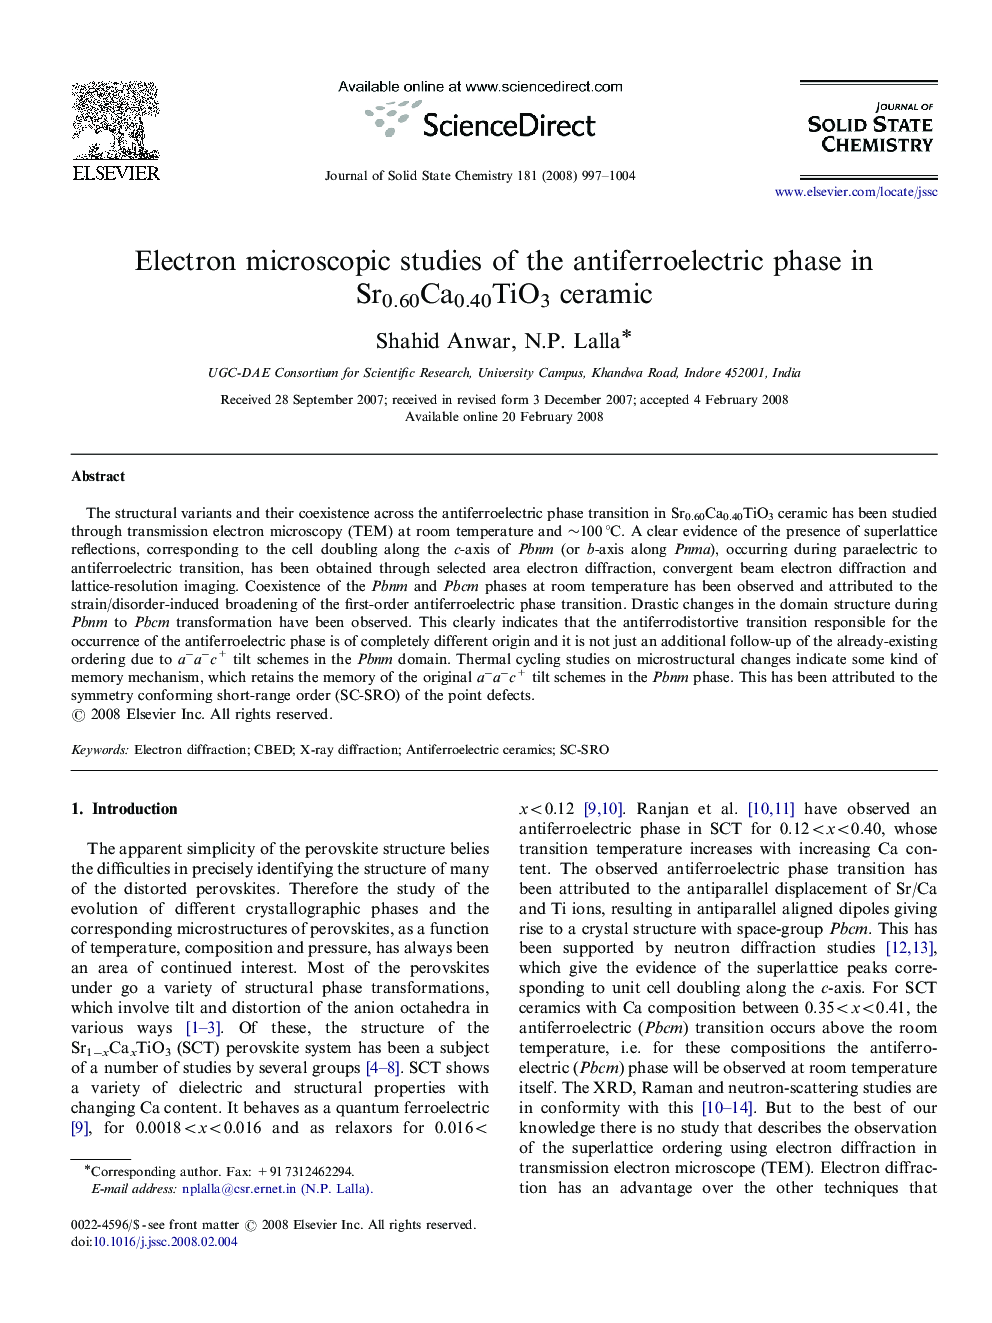 Electron microscopic studies of the antiferroelectric phase in Sr0.60Ca0.40TiO3 ceramic